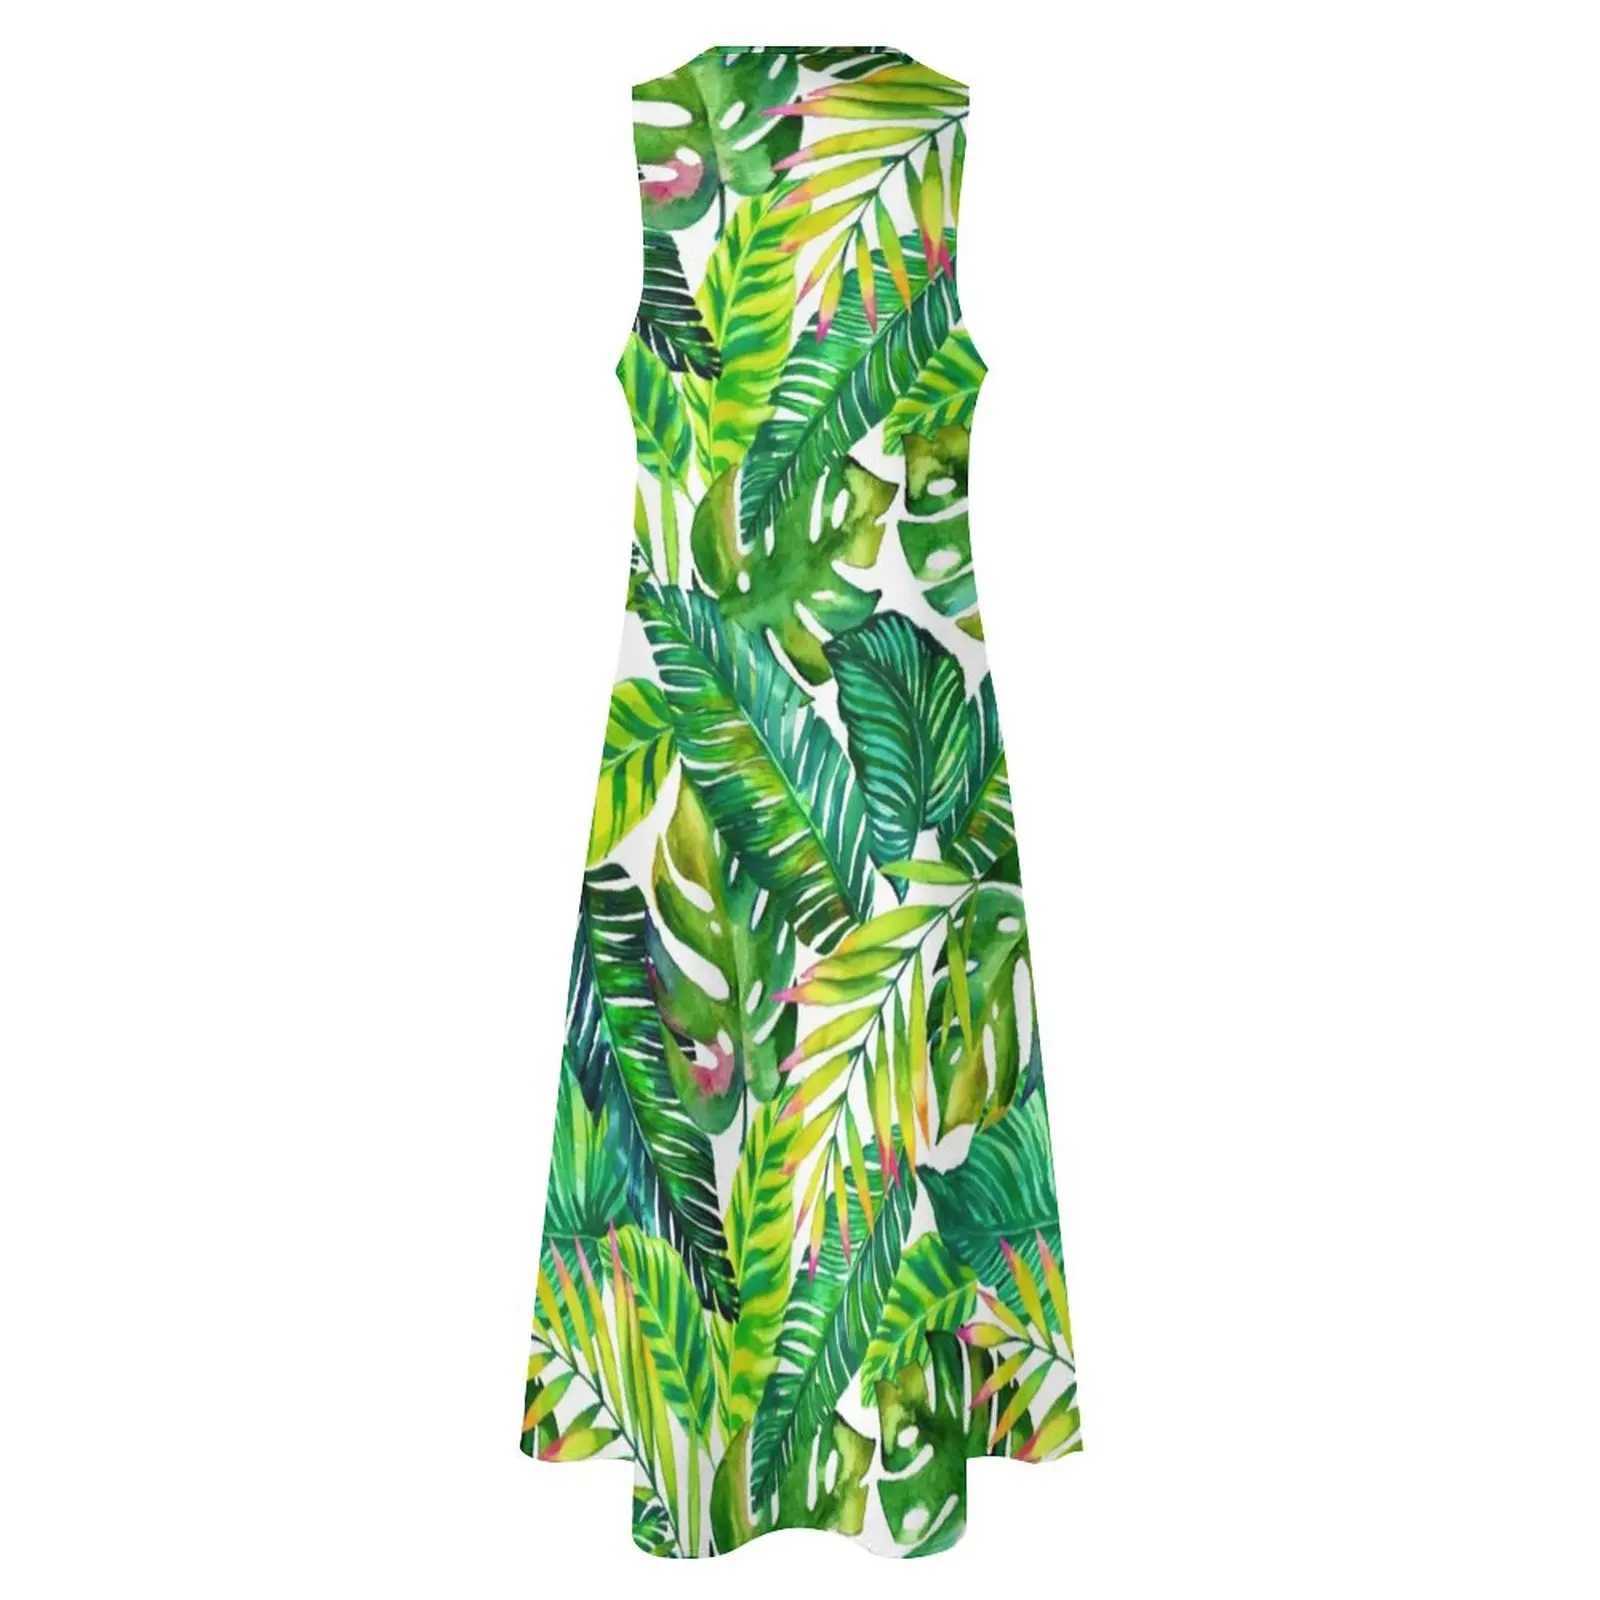 Vestidos casuais básicos folhas de banana vestido estampado de palmeira tropical vestor maxi vestido estético boêmia vestidos longos